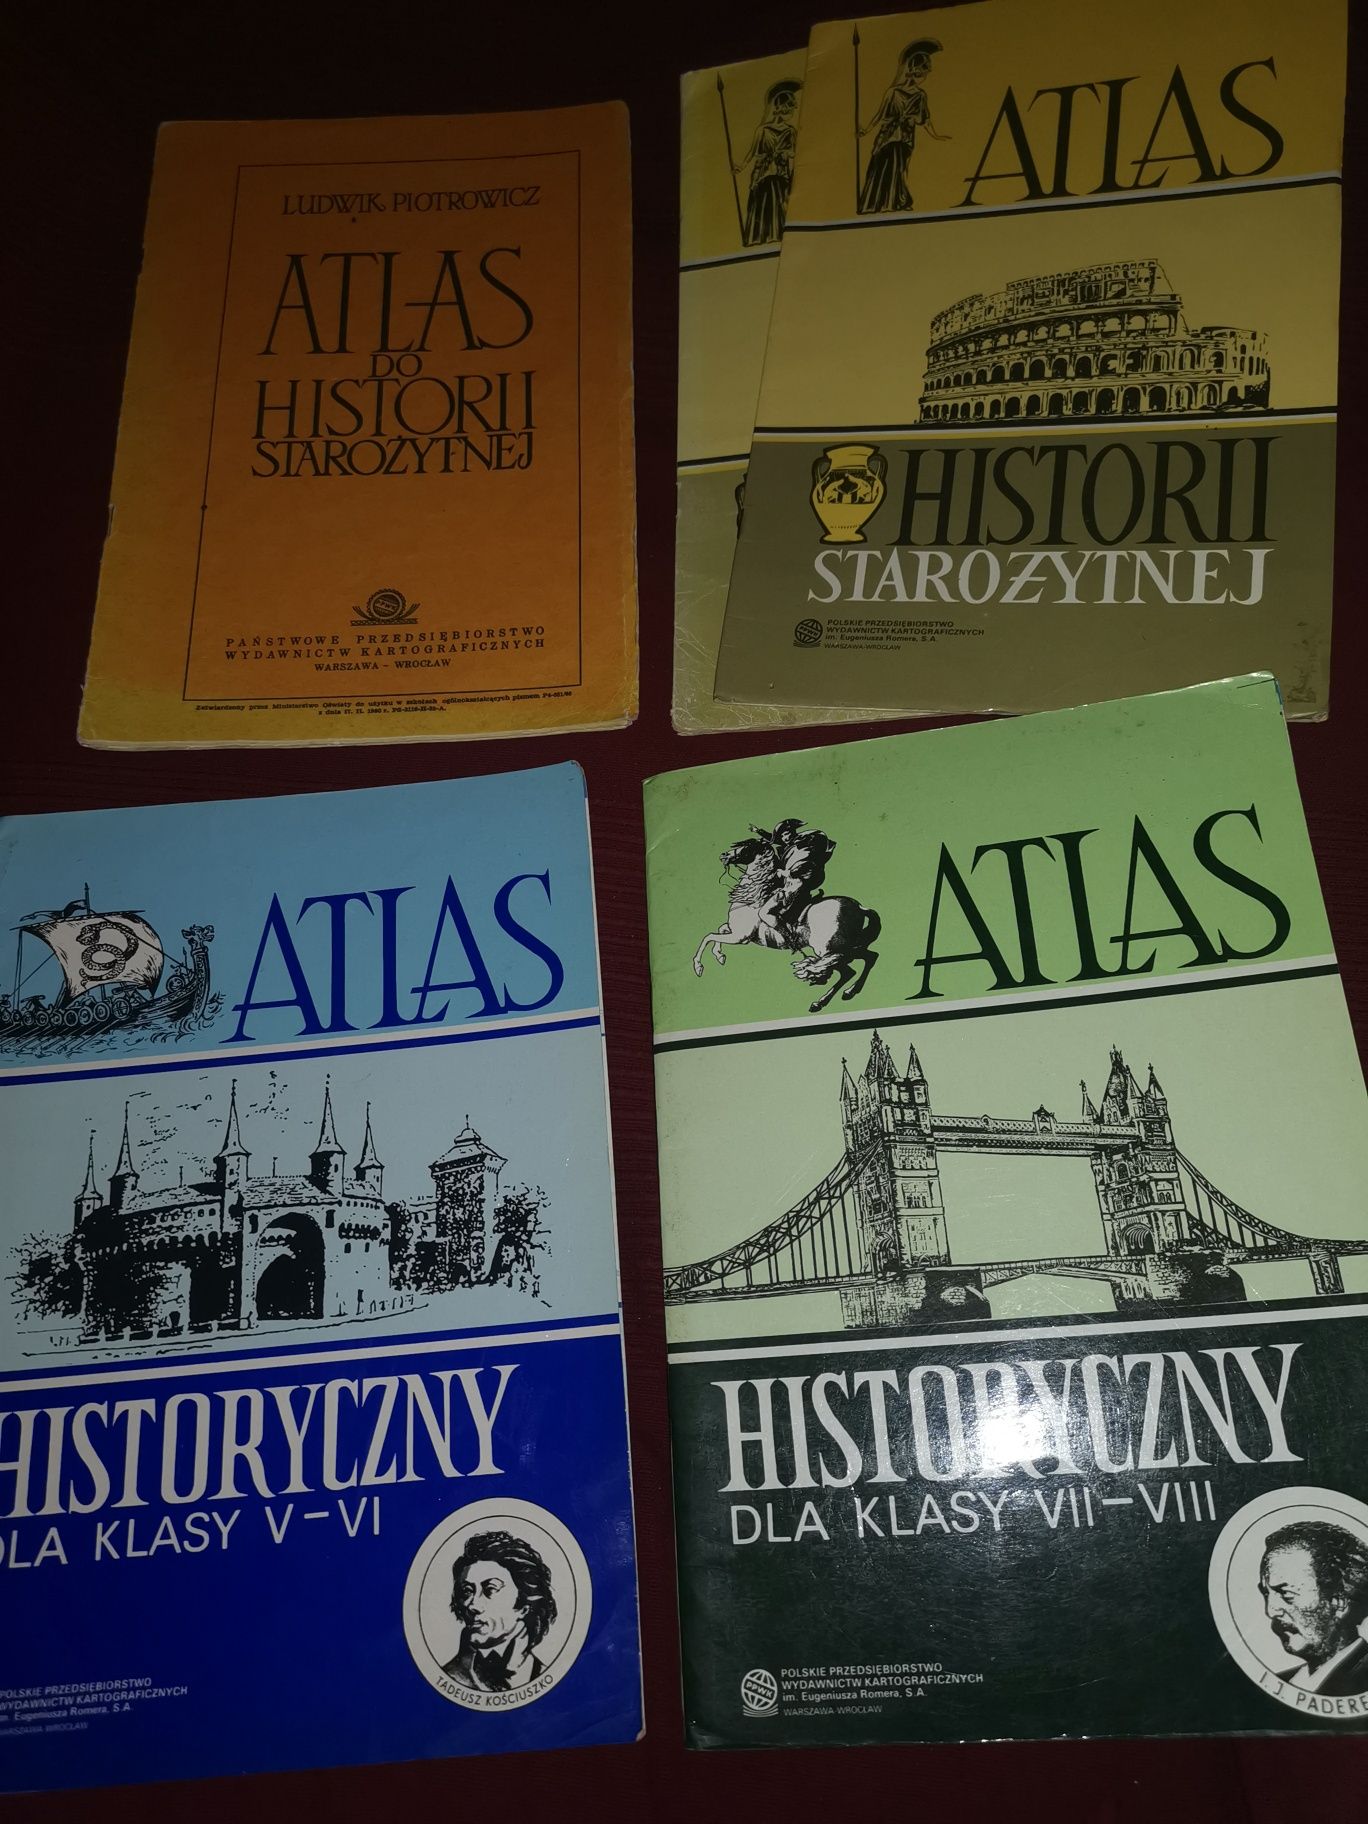 Atlas do historii/ geografii